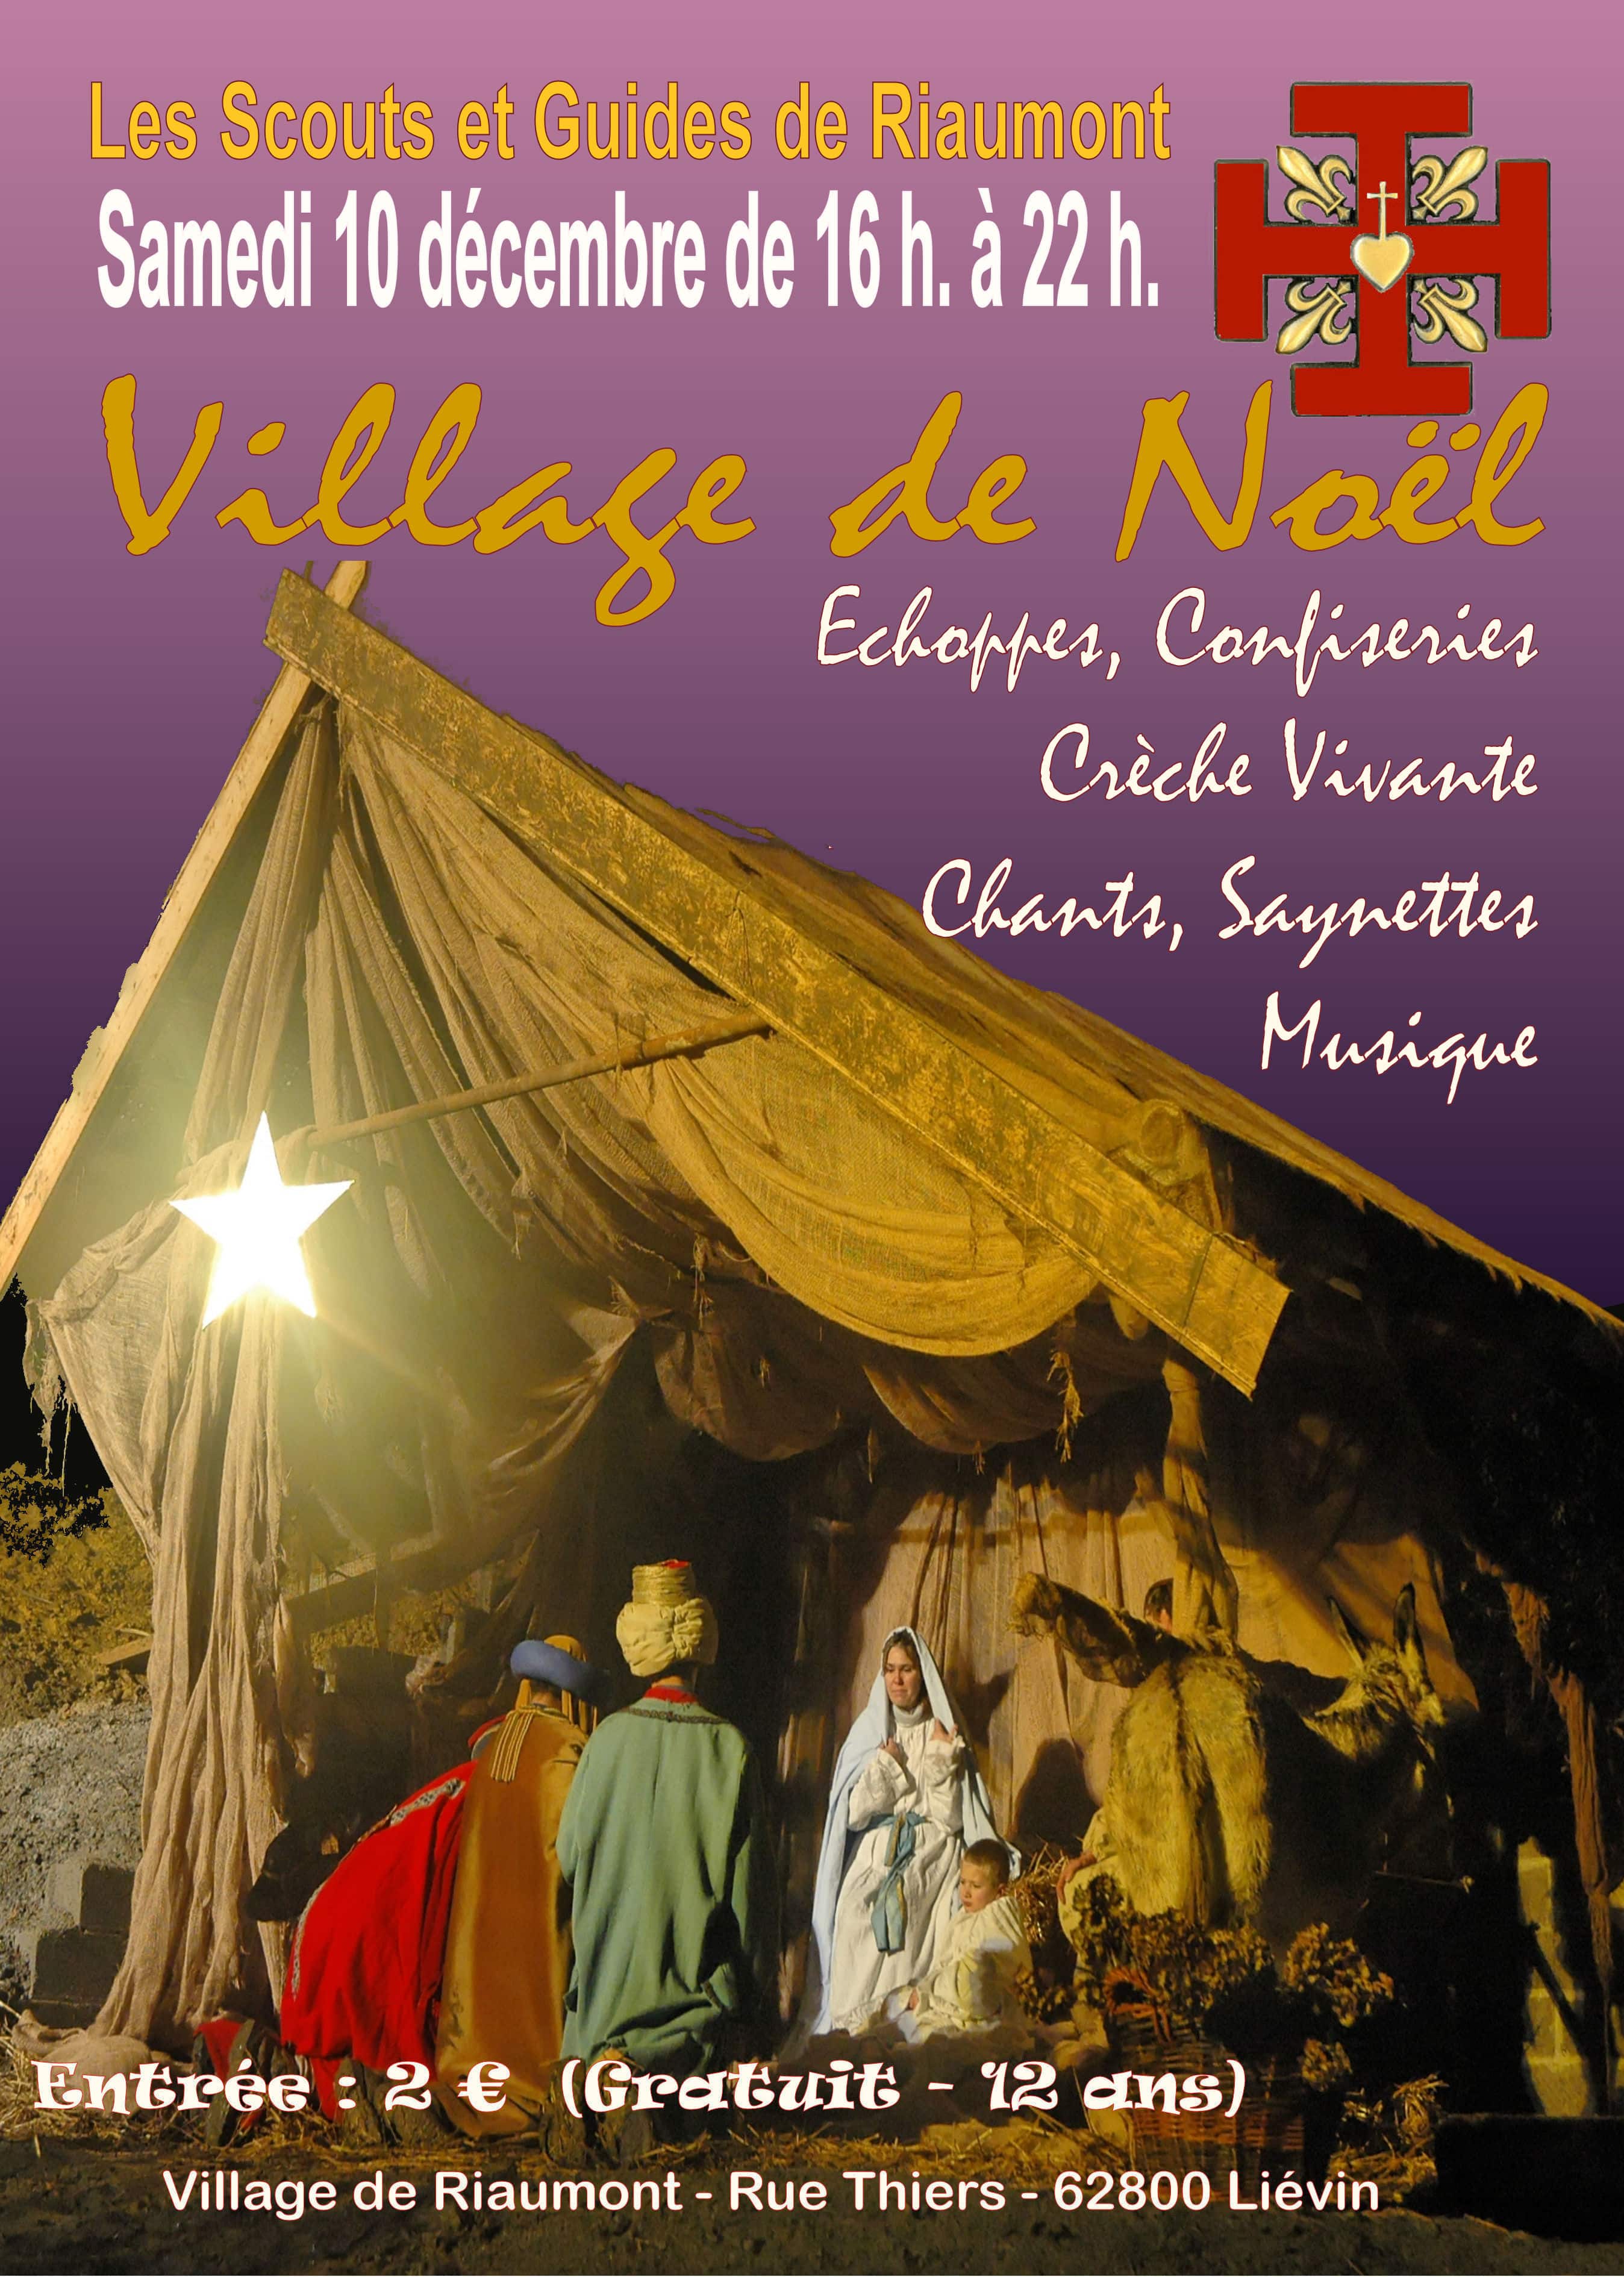 St Nicolas – Village de Noël 2022